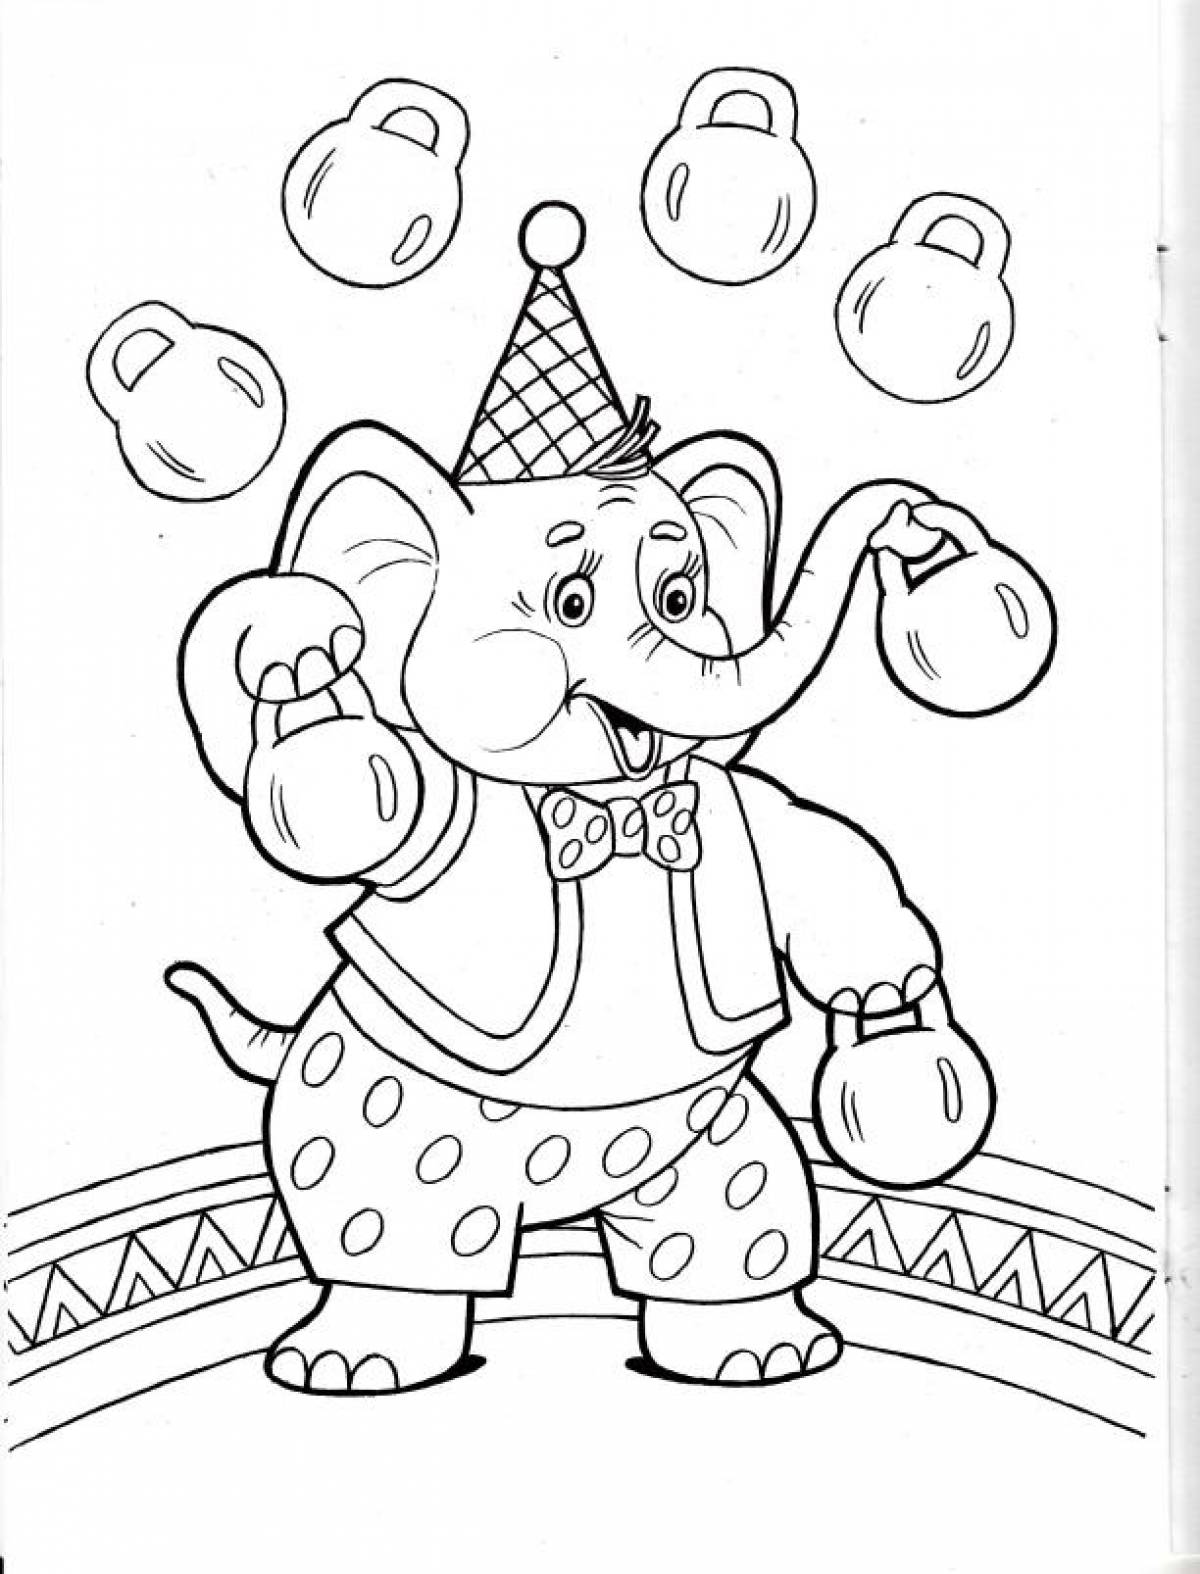 Elephant juggling